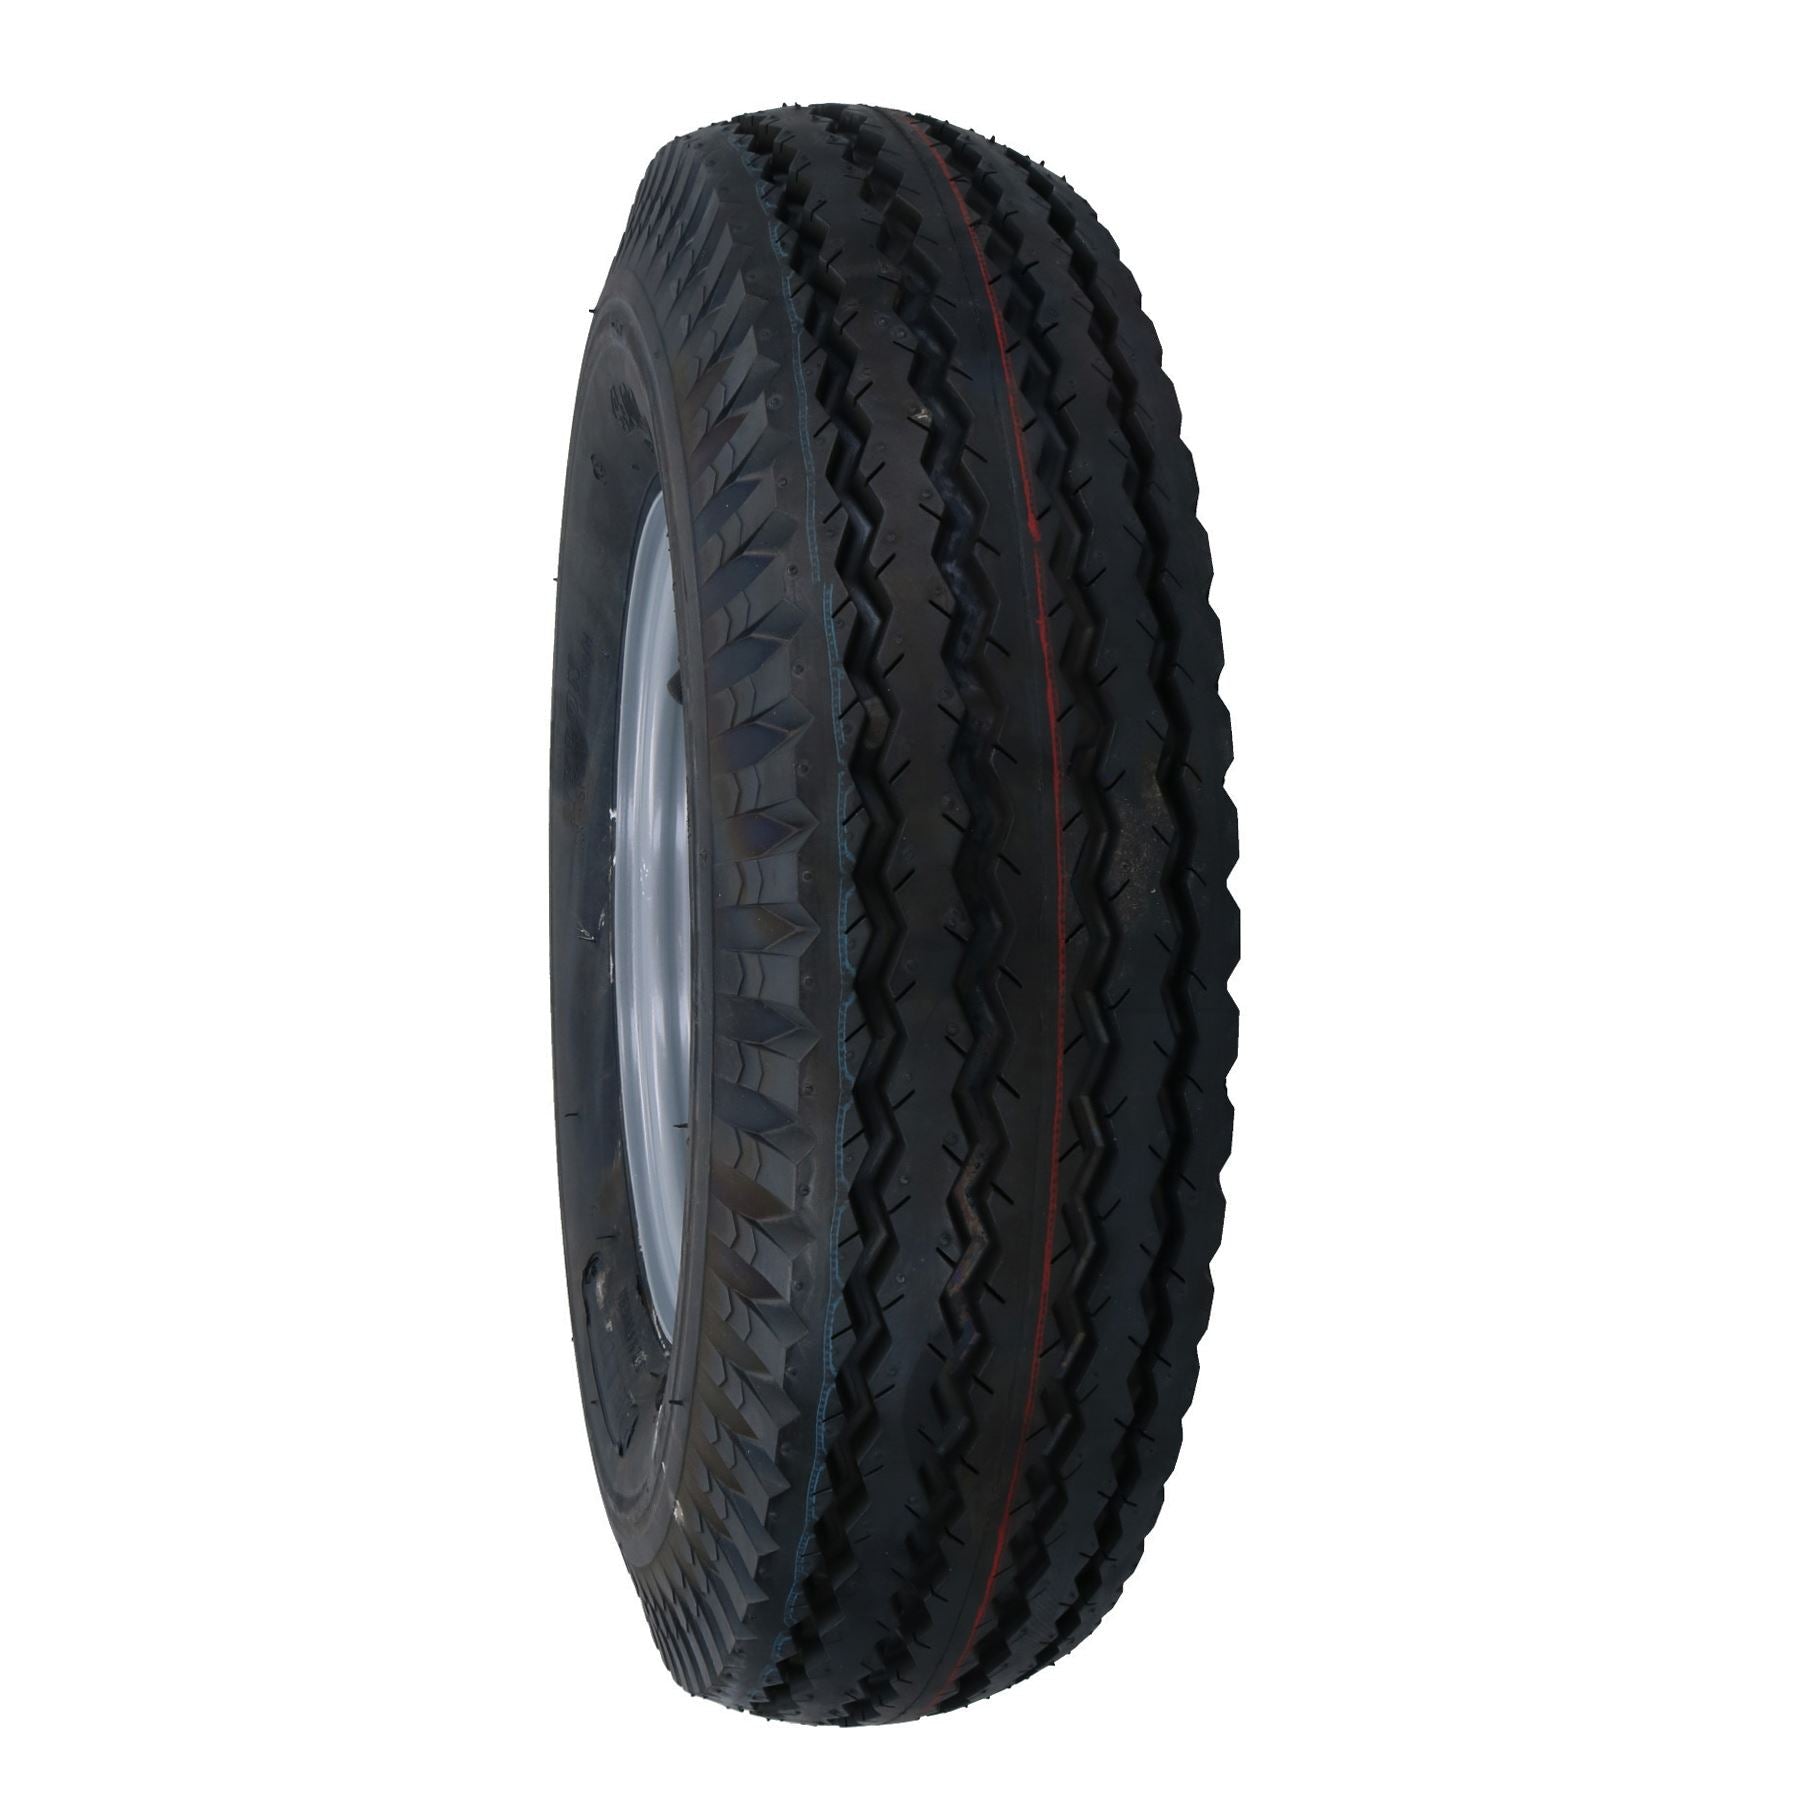 4.80 x 8 / 400 x 8 Inch Trailer Wheel + Tyre 4 Stud 4” PCD 4 Ply 265kg Max Load